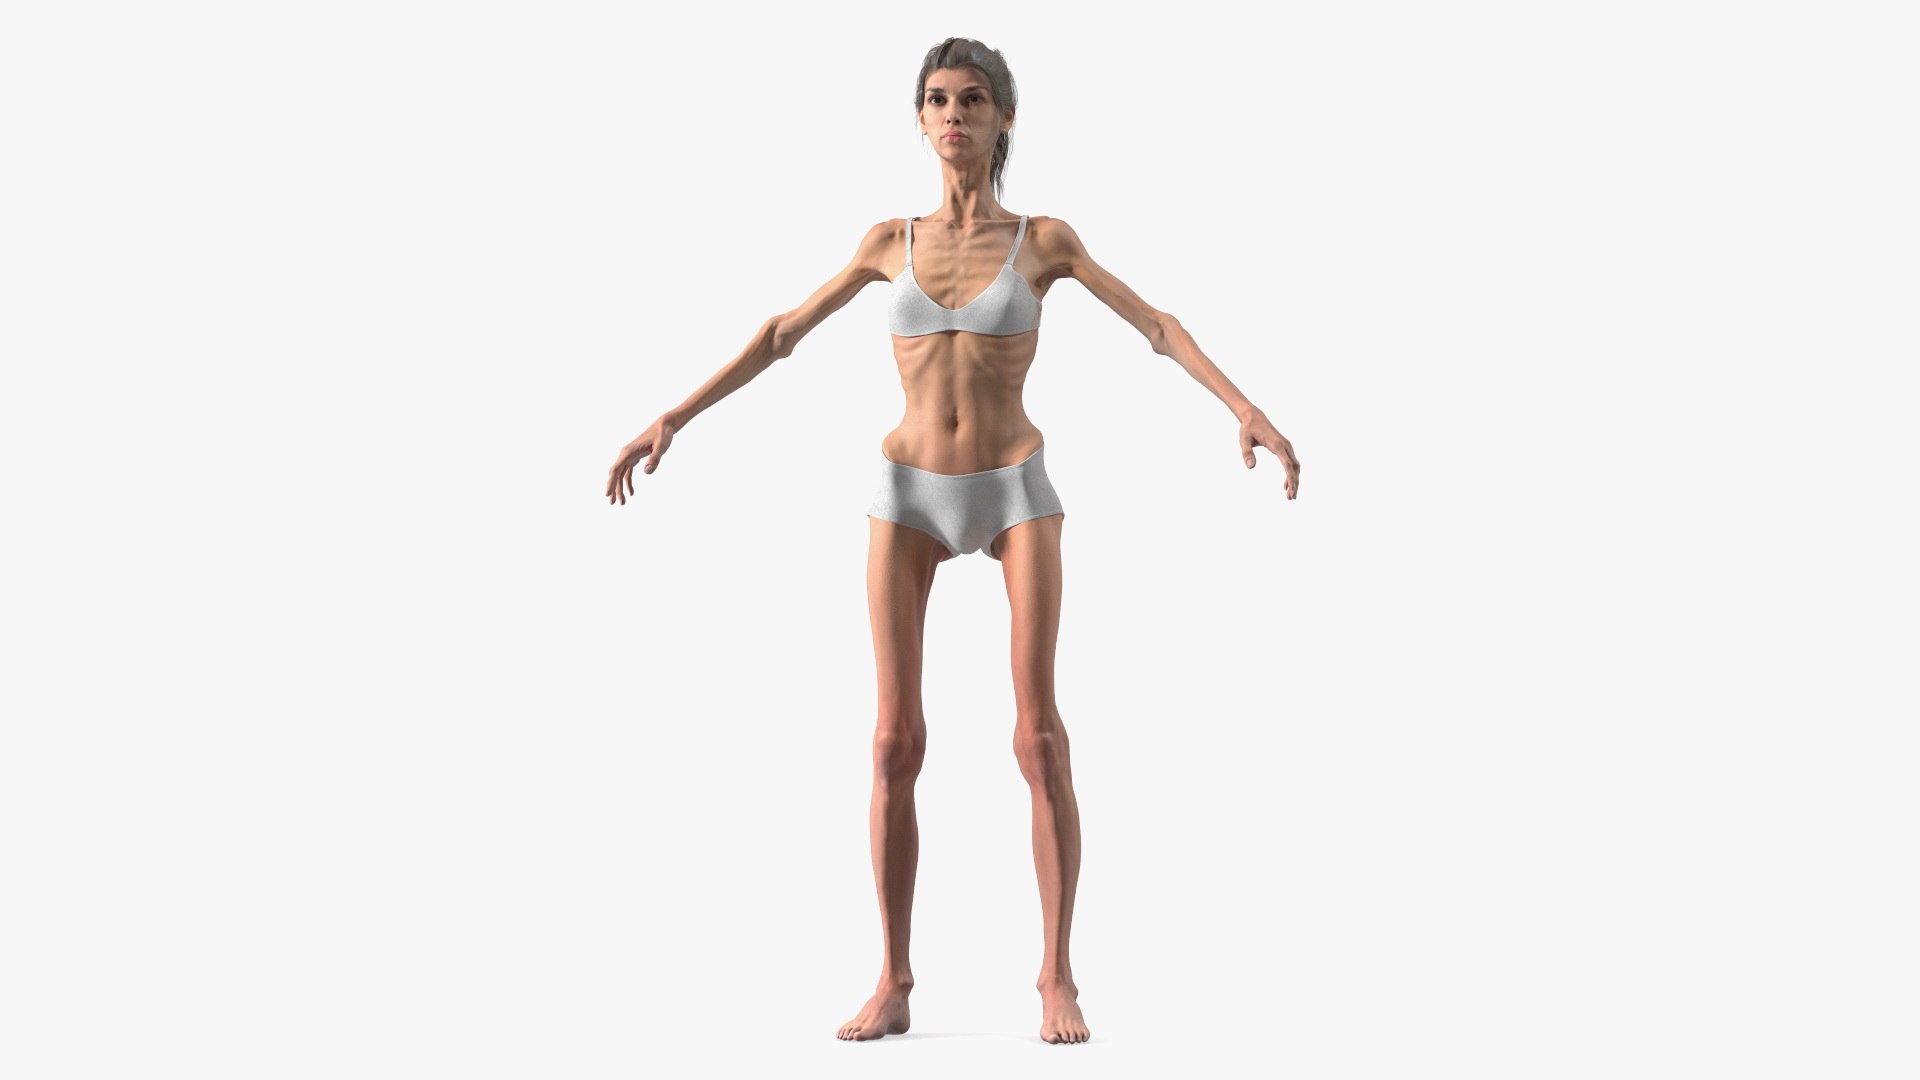 Fitness Athletic Man T-Pose 3D Model $119 - .3ds .blend .c4d .fbx .ma .obj  .max .unitypackage .upk .gltf - Free3D